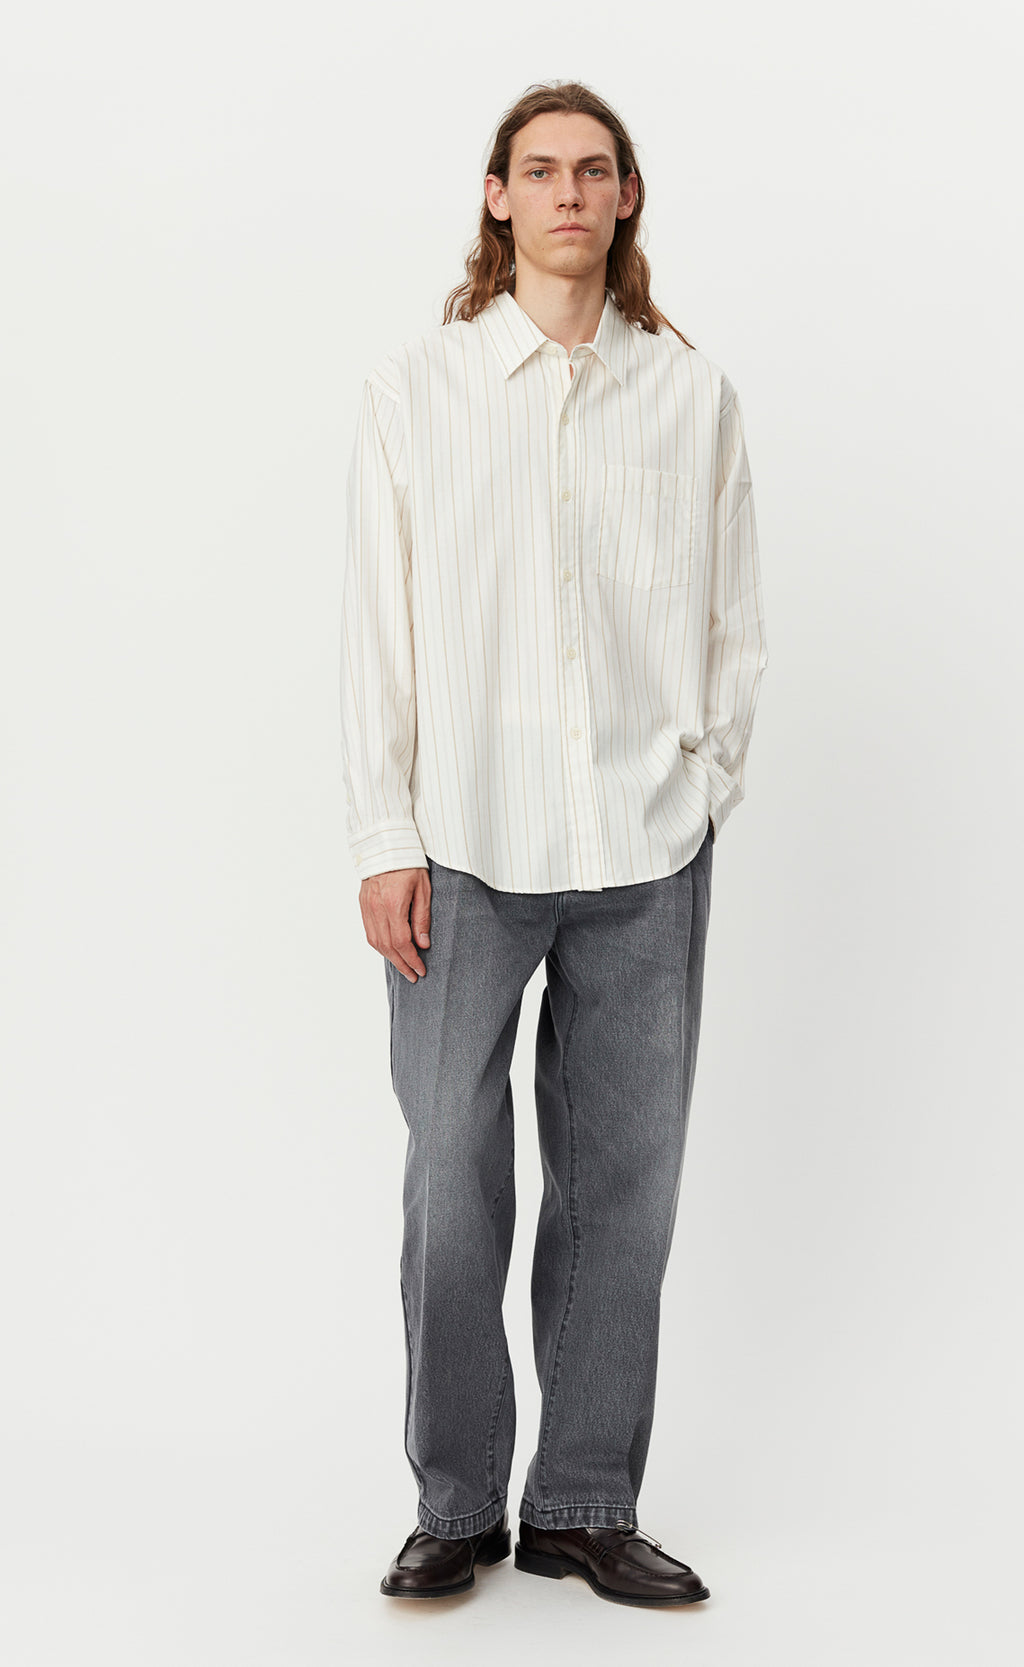 Executive Shirt - Beige Stripe Silk